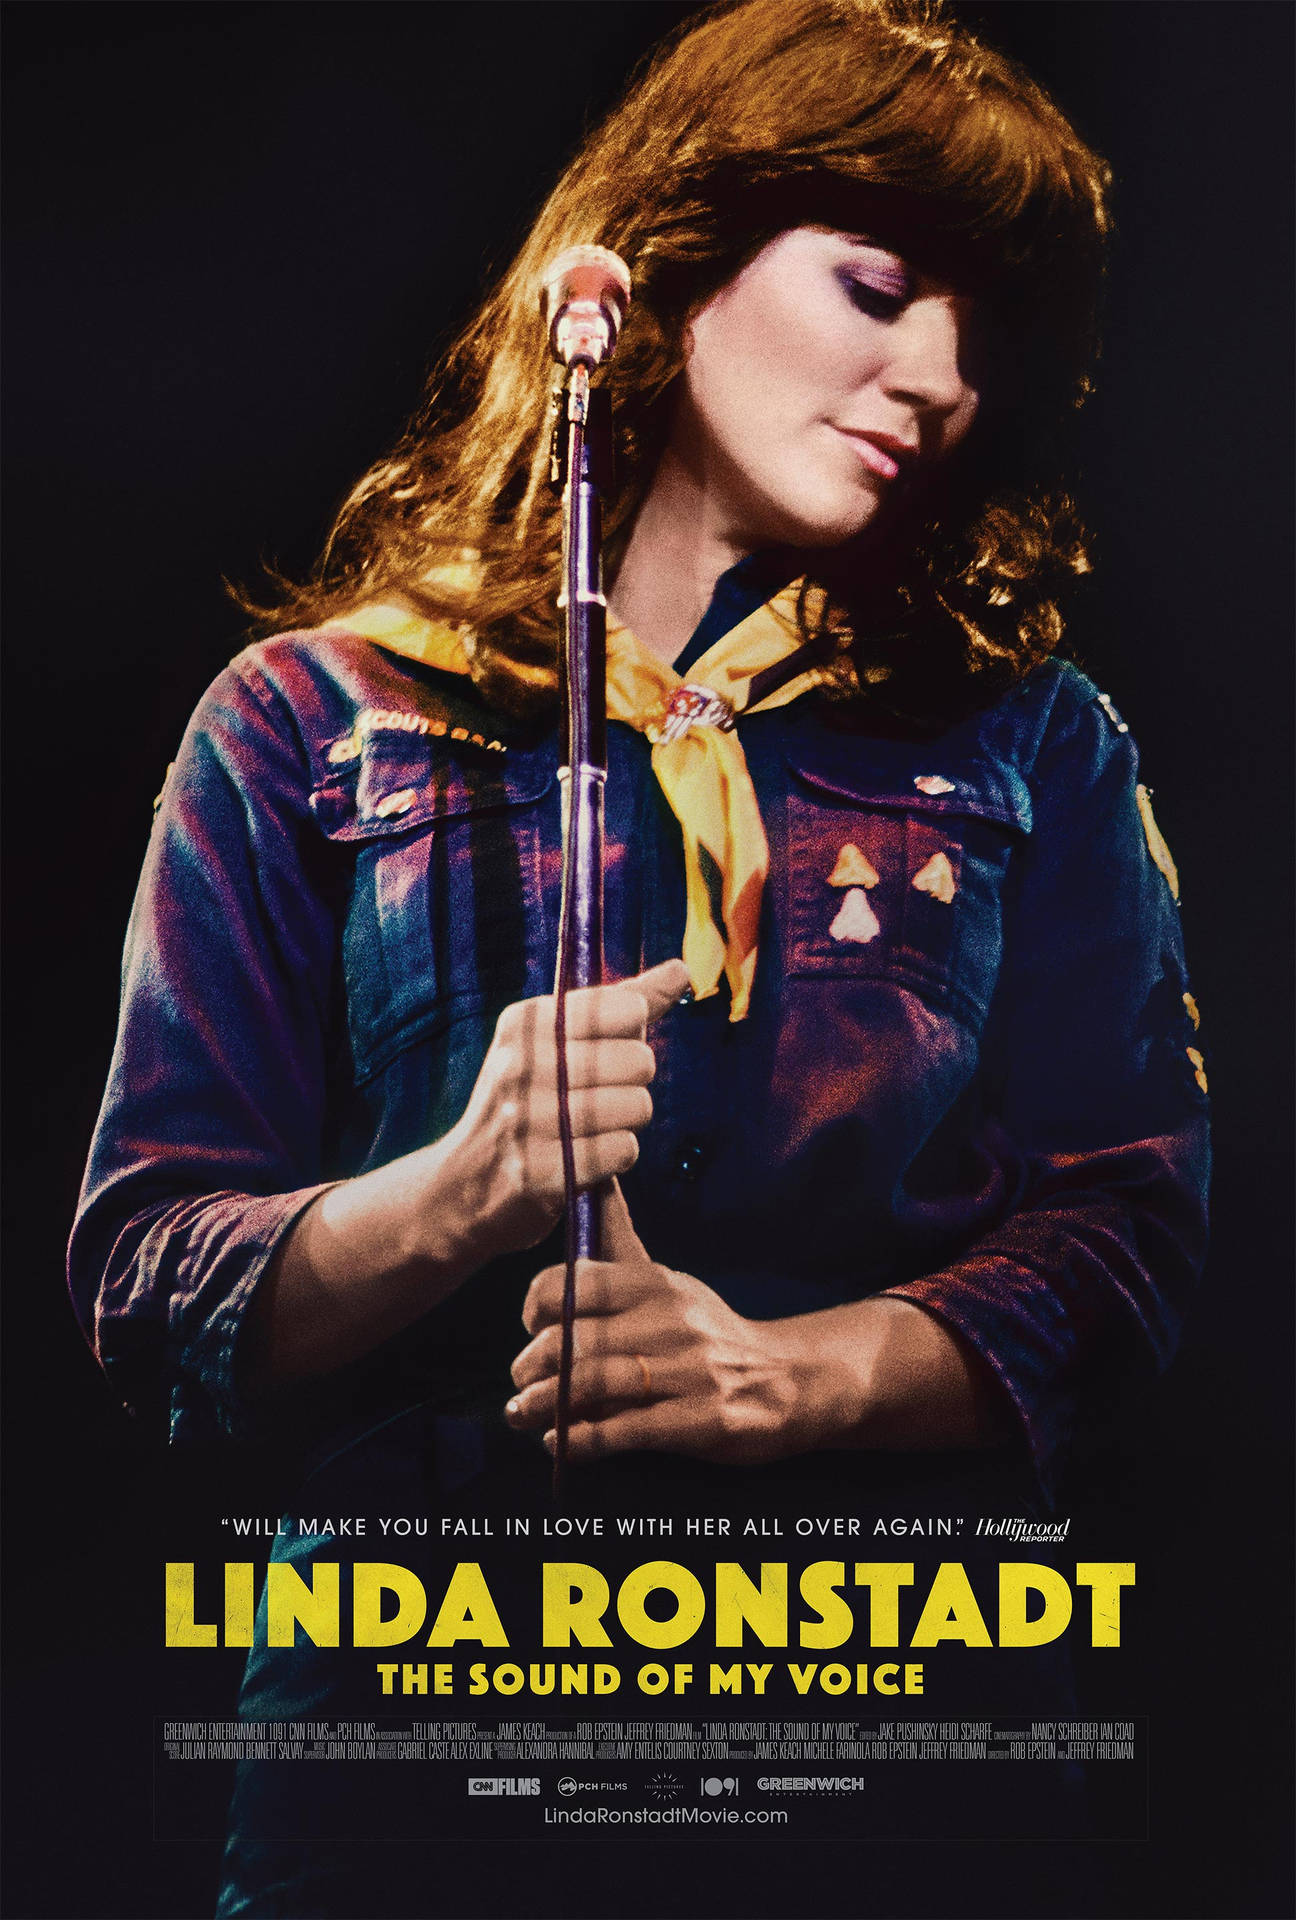 Linda Ronstadt Poster Design Wallpaper